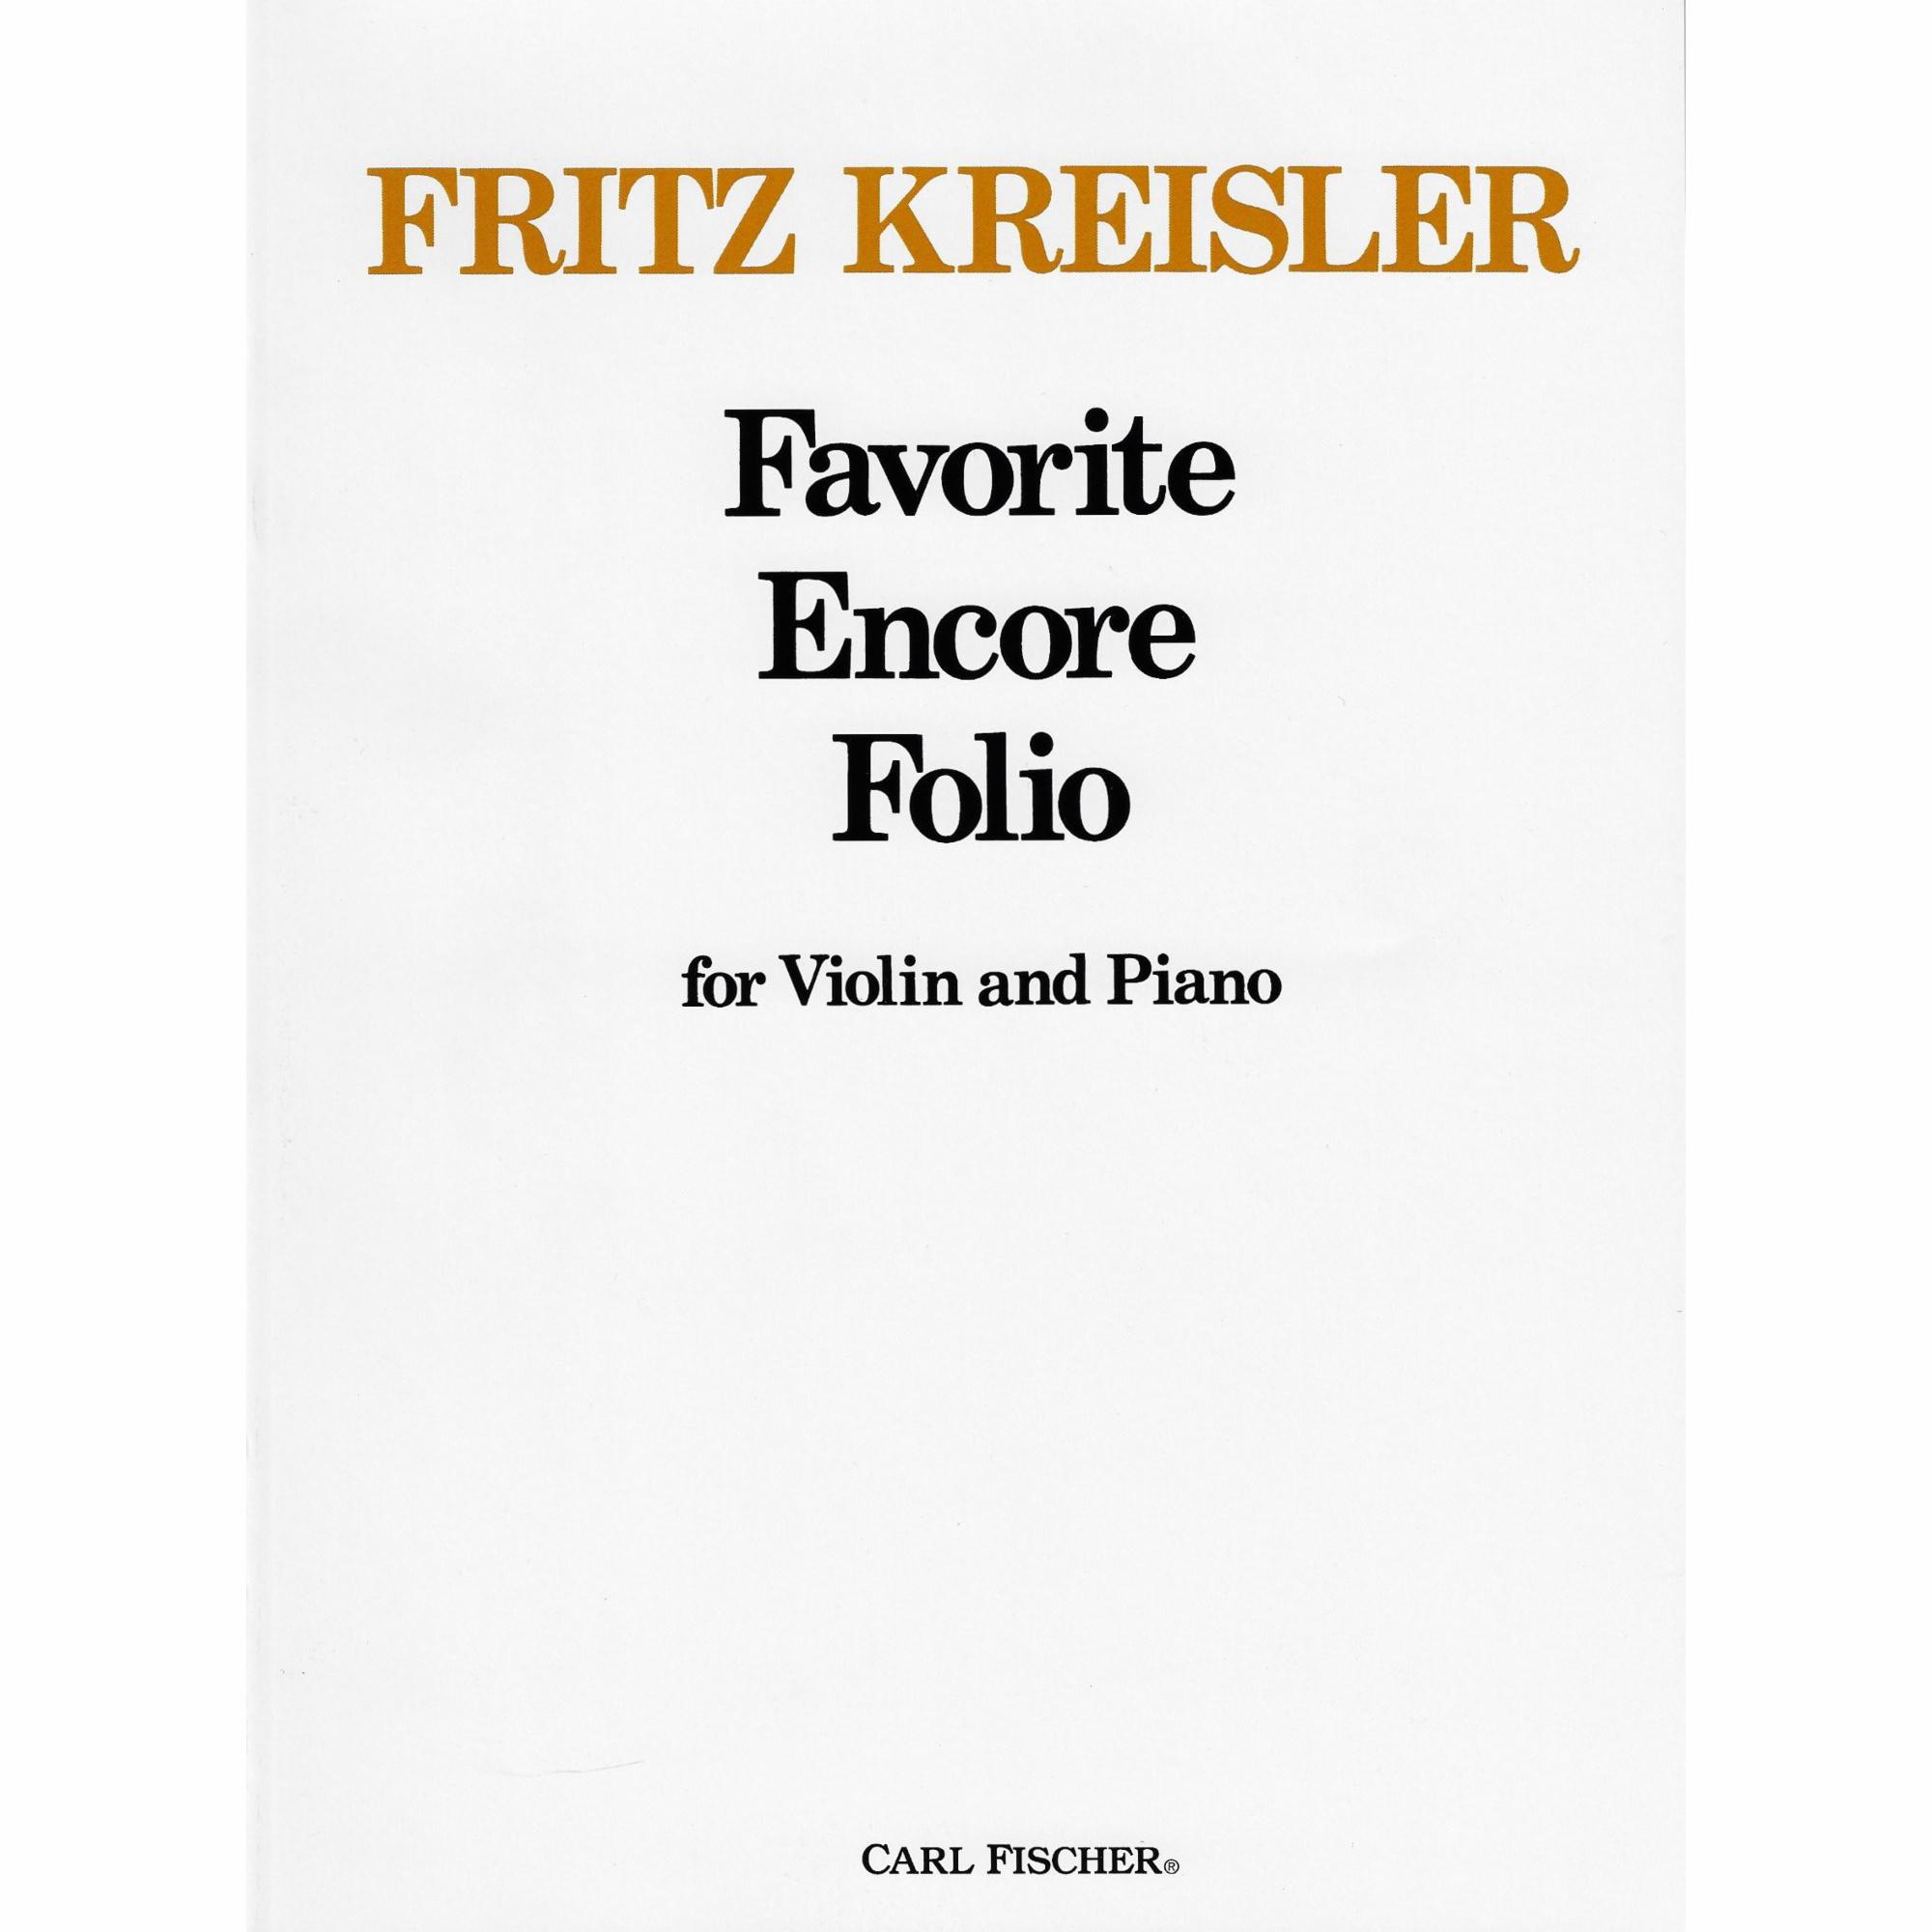 Fritz Kreisler: Favorite Encore Folio